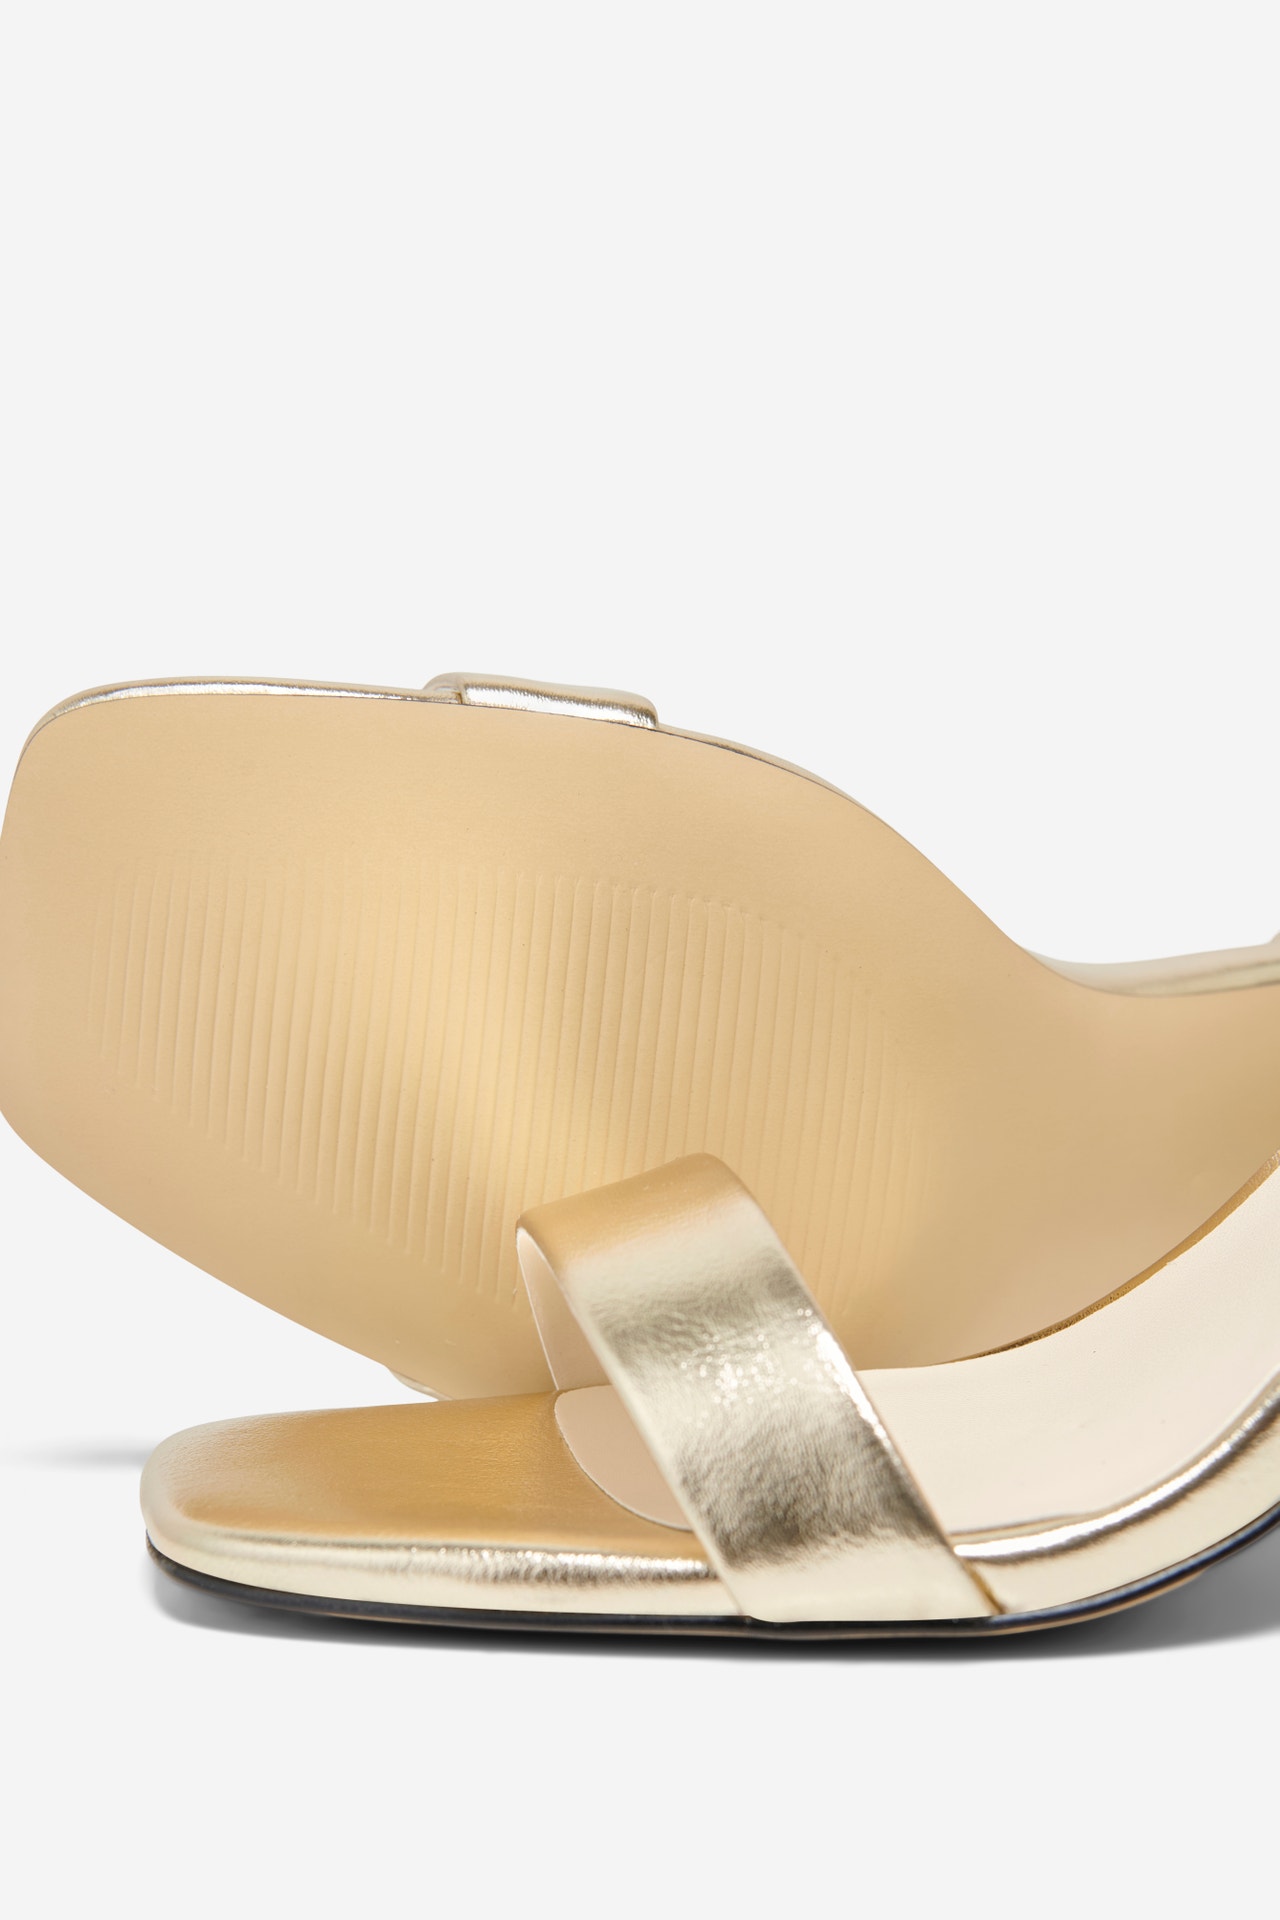 ONLY Open toe Adjustable strap Sandal -Gold Colour - 15288449